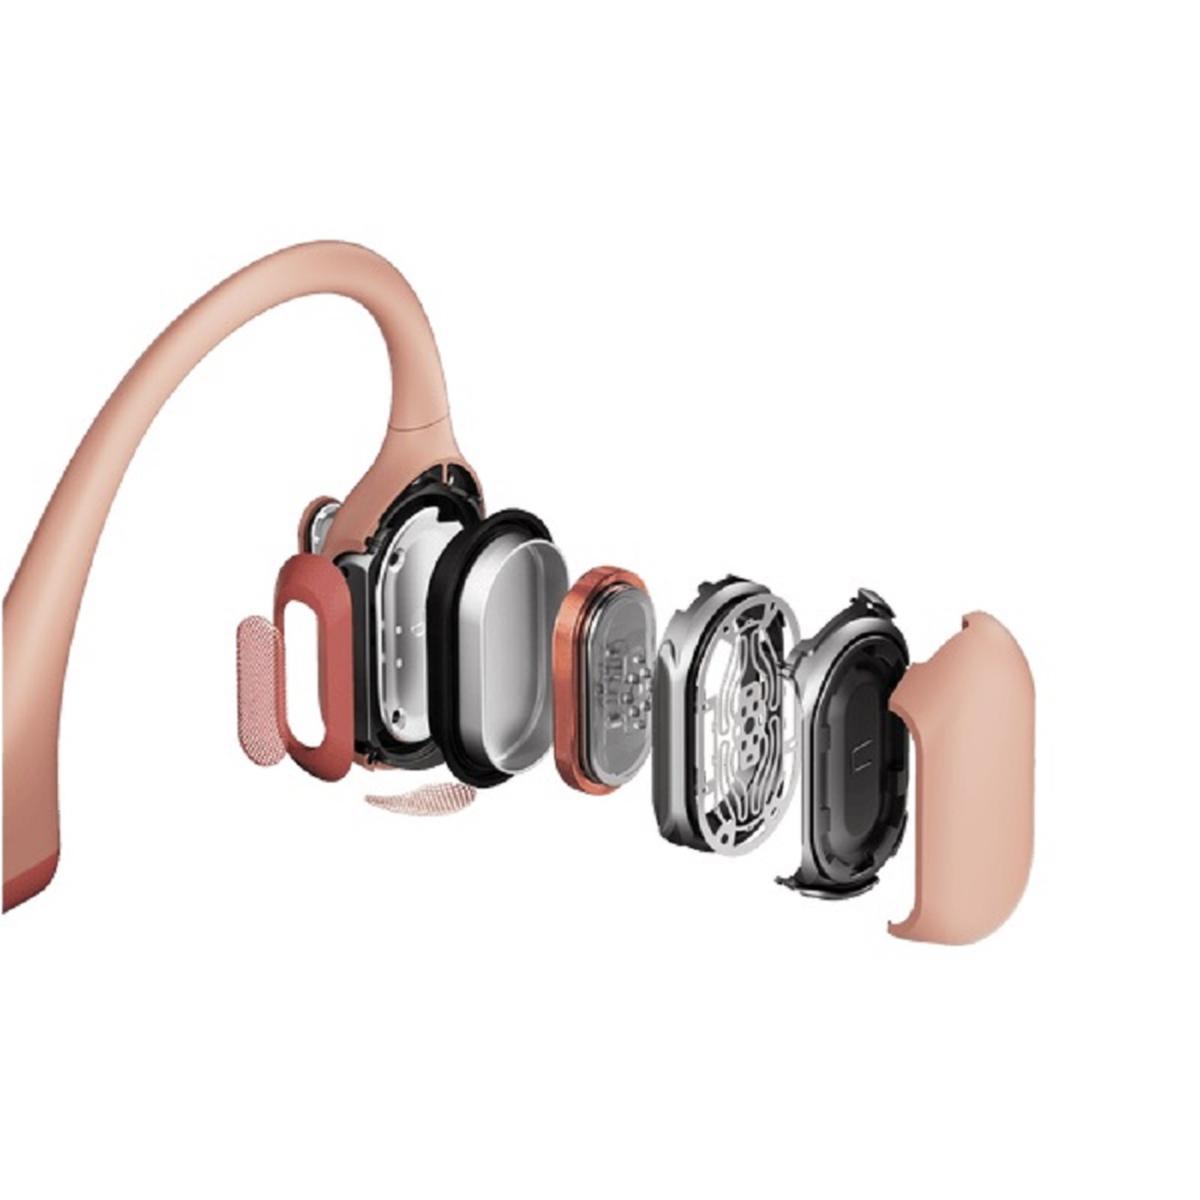 Shokz OpenRun Pro Premium Bone Conduction Open-Ear Sport Headphones